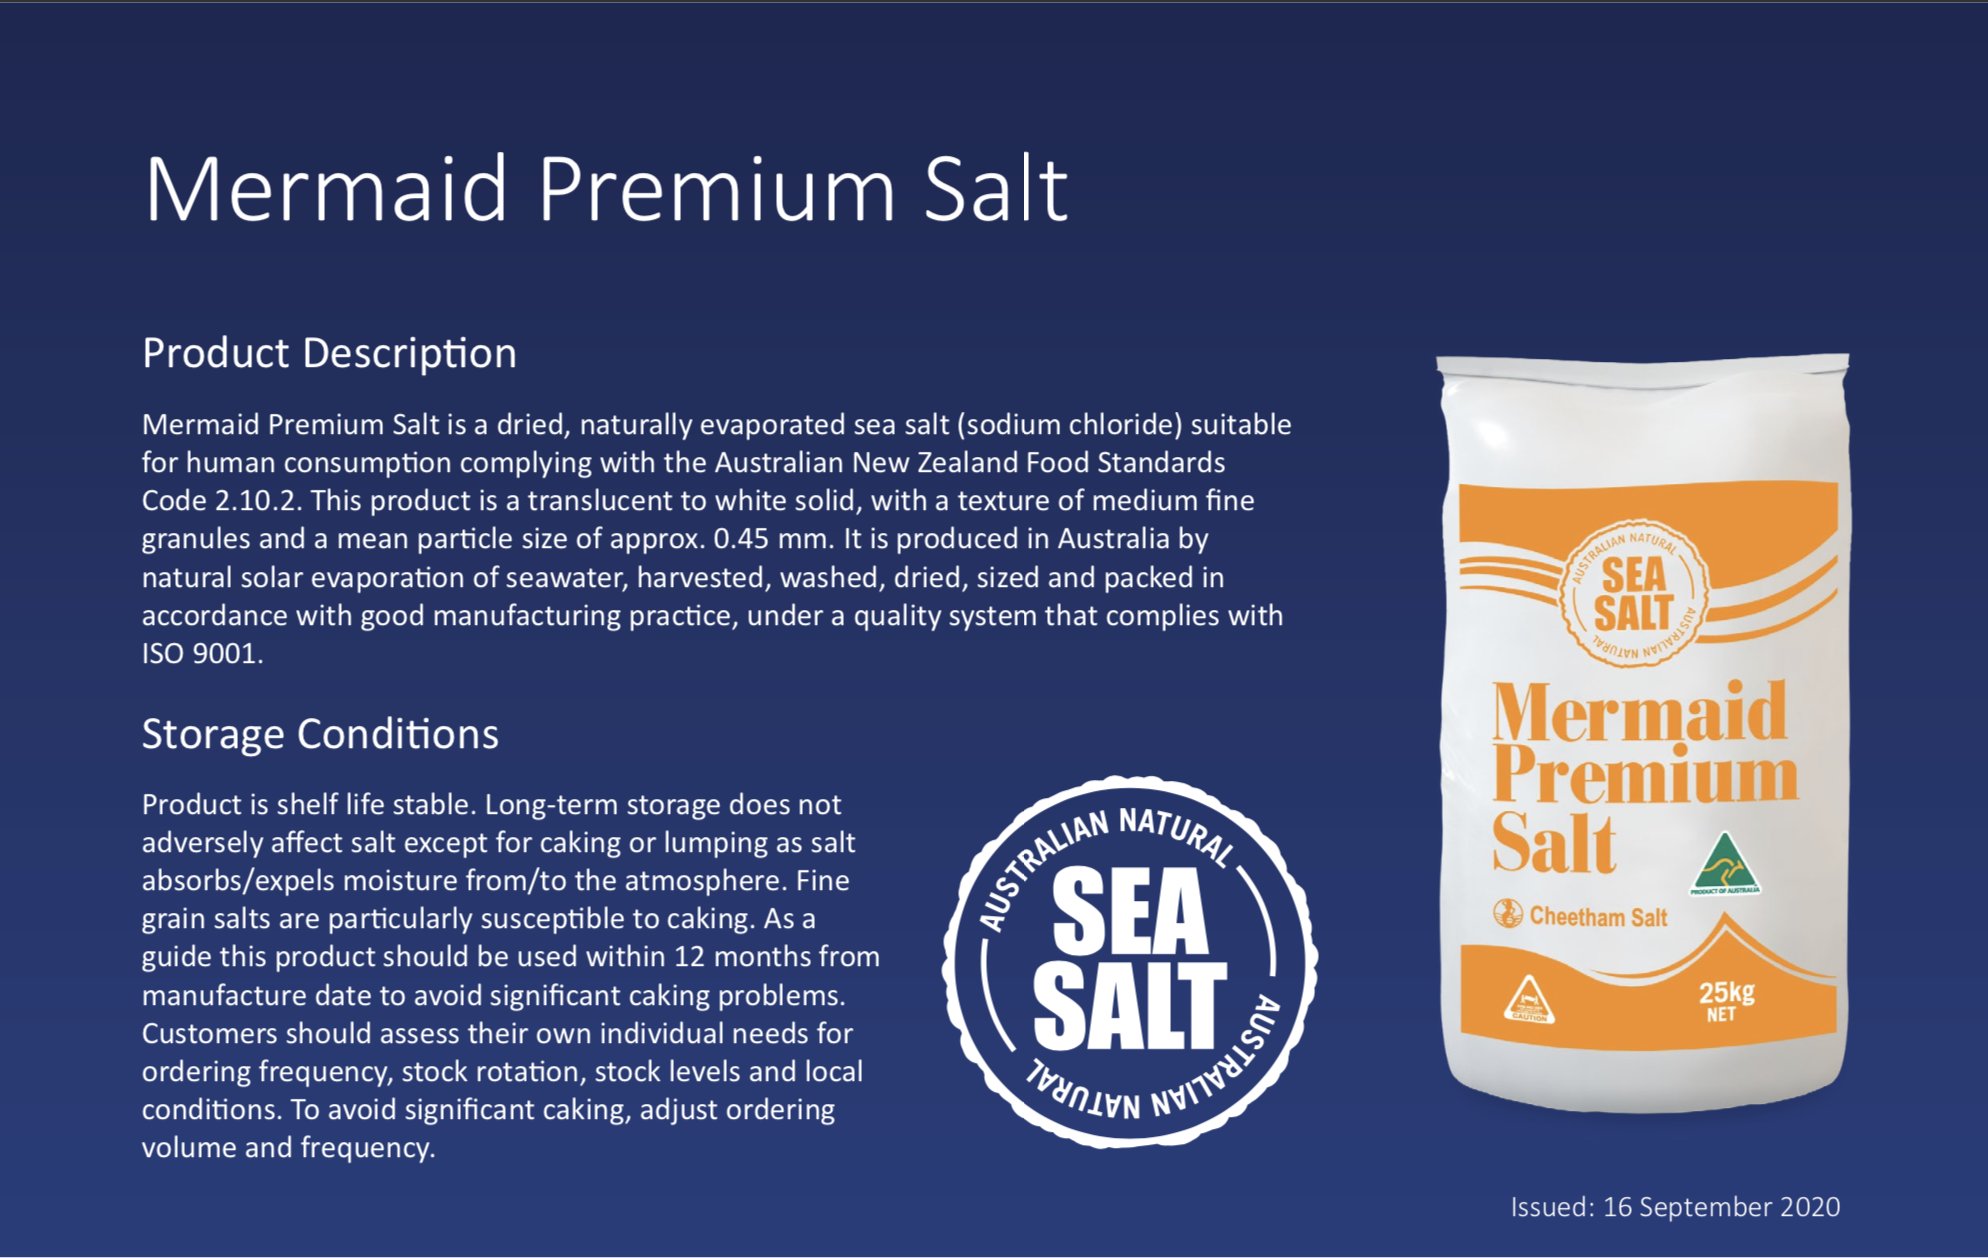 Mermaid Premium Salt product description. The product description includes an image of the product and storage information.